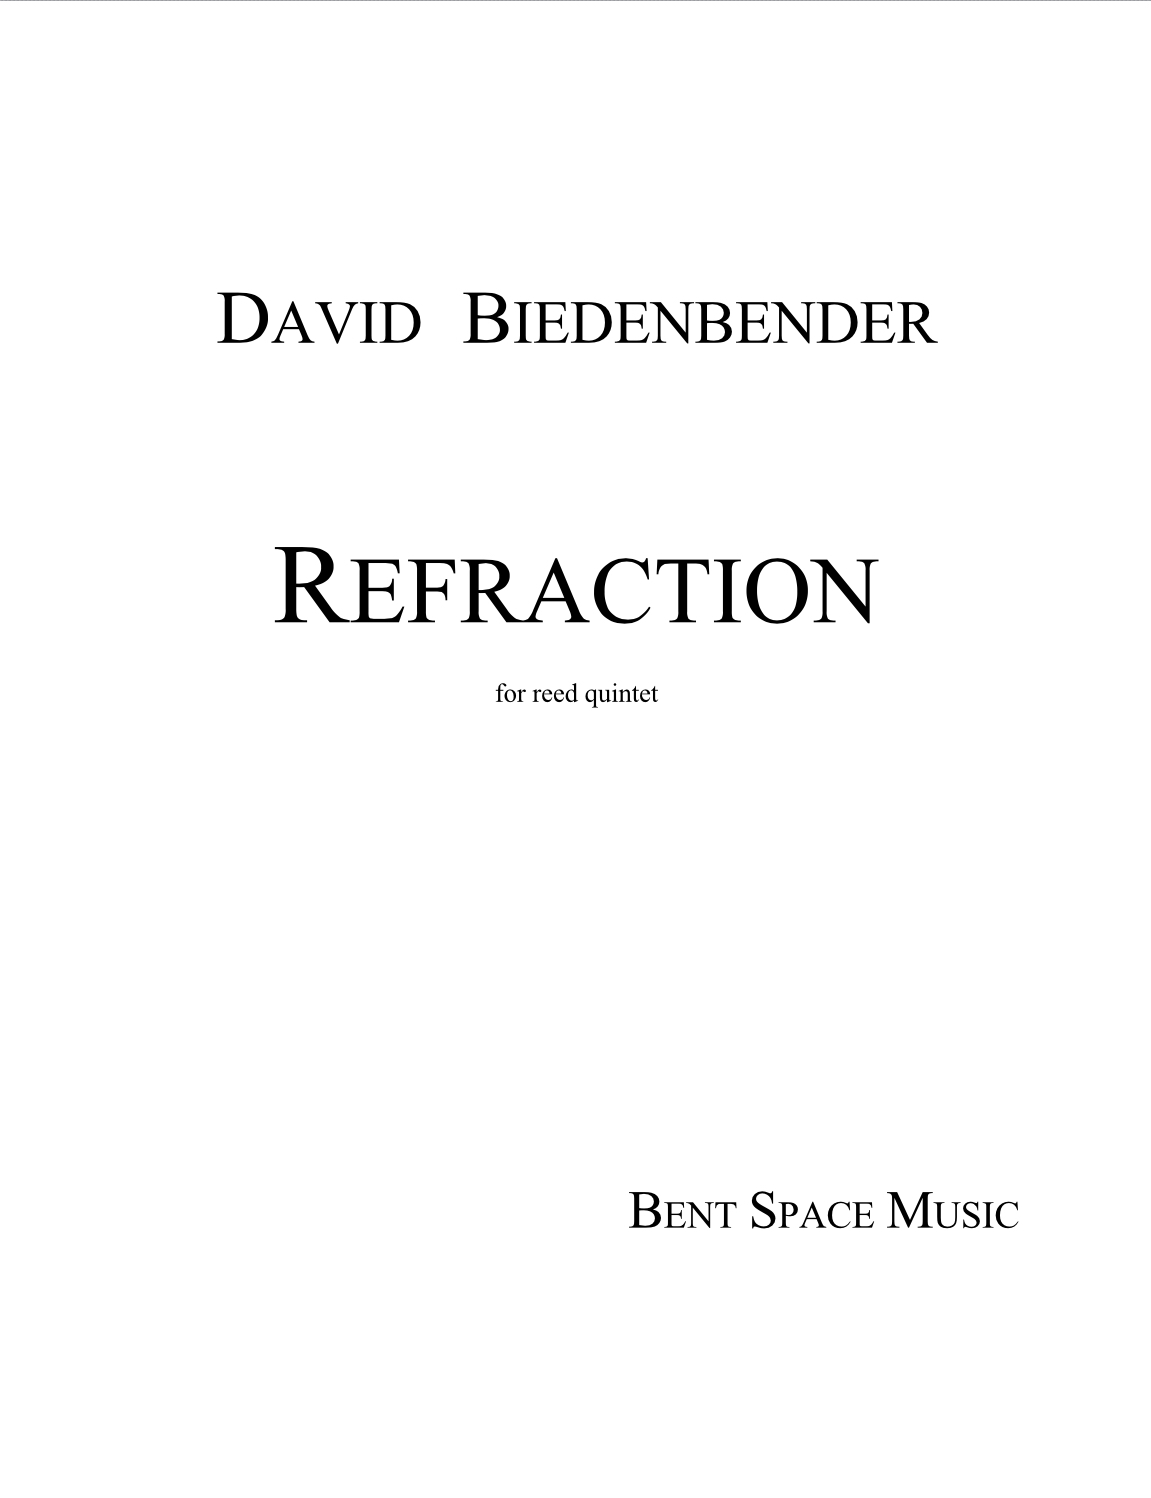 Refraction  by David Biedenbender 